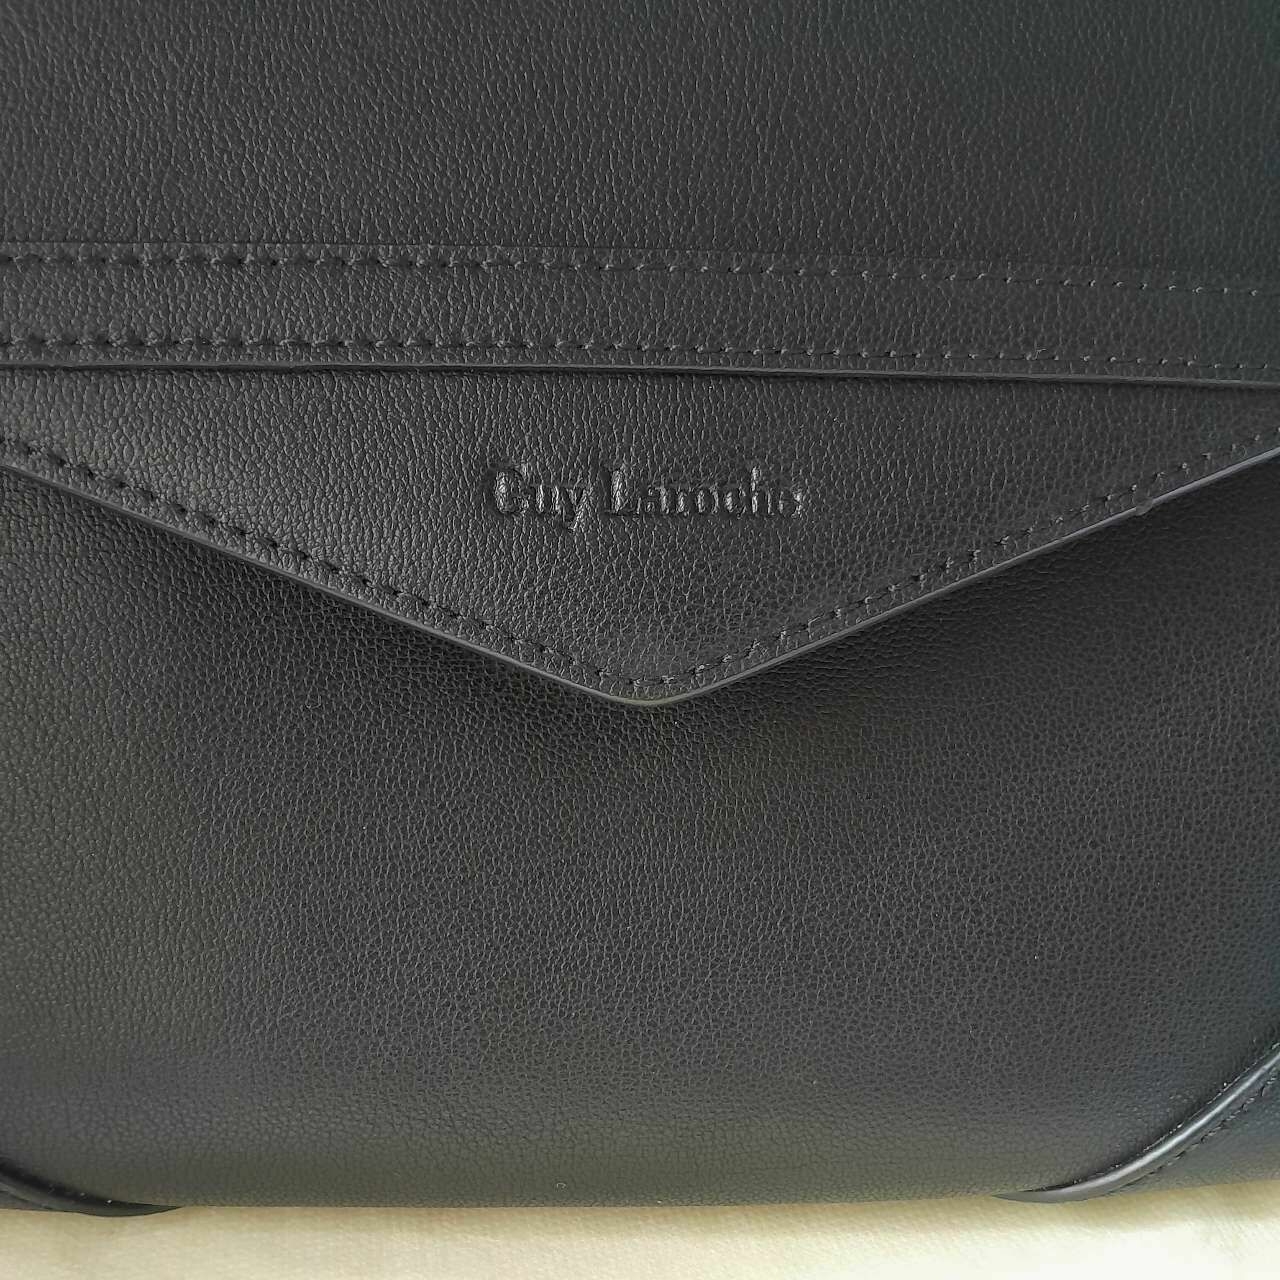 Guy Laroche Black Handbag